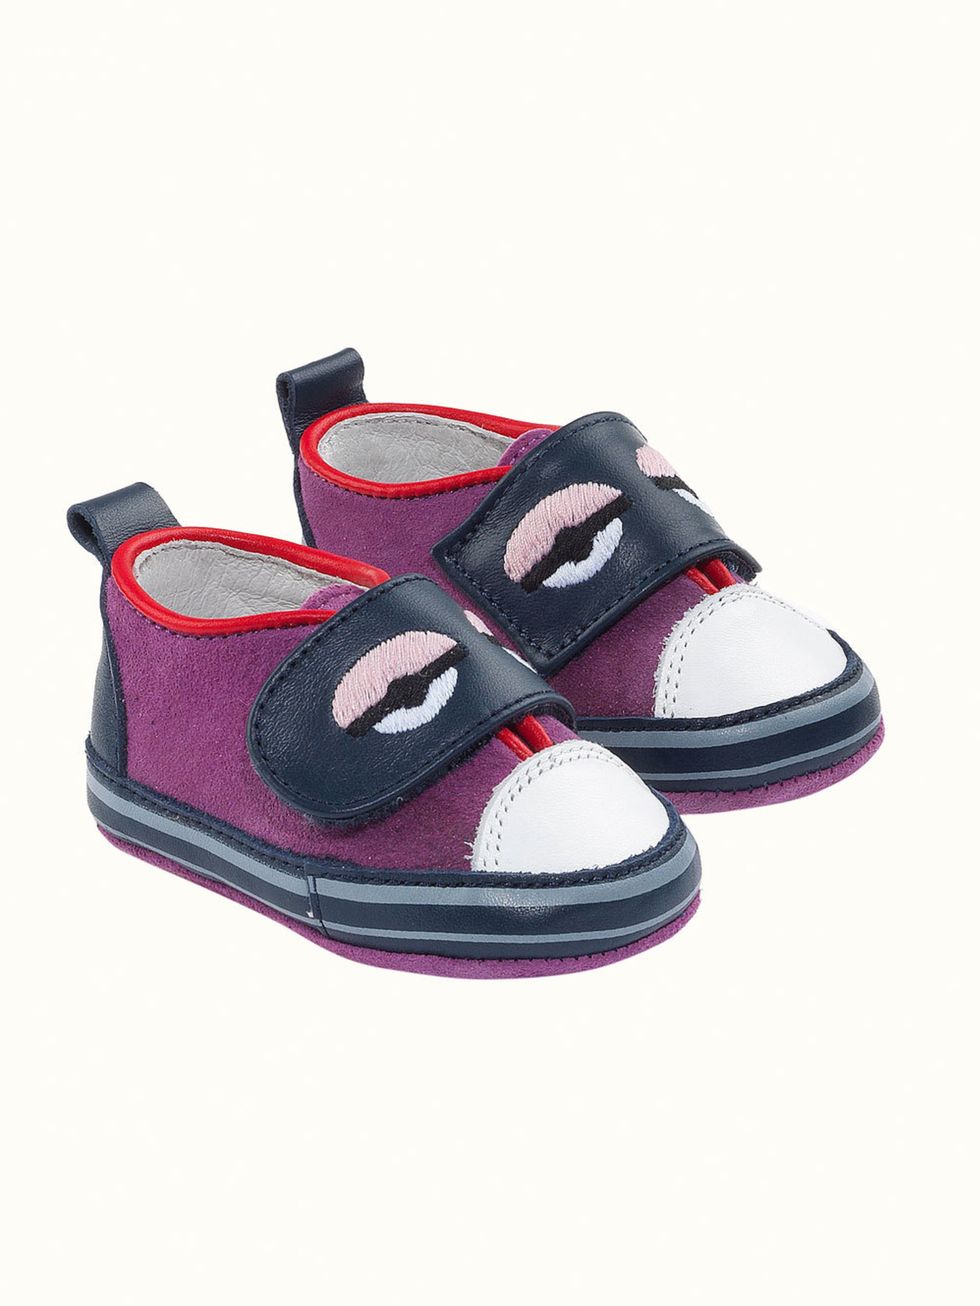 Footwear, Product, Shoe, Pink, Magenta, Purple, Violet, Carmine, Walking shoe, Brand, 